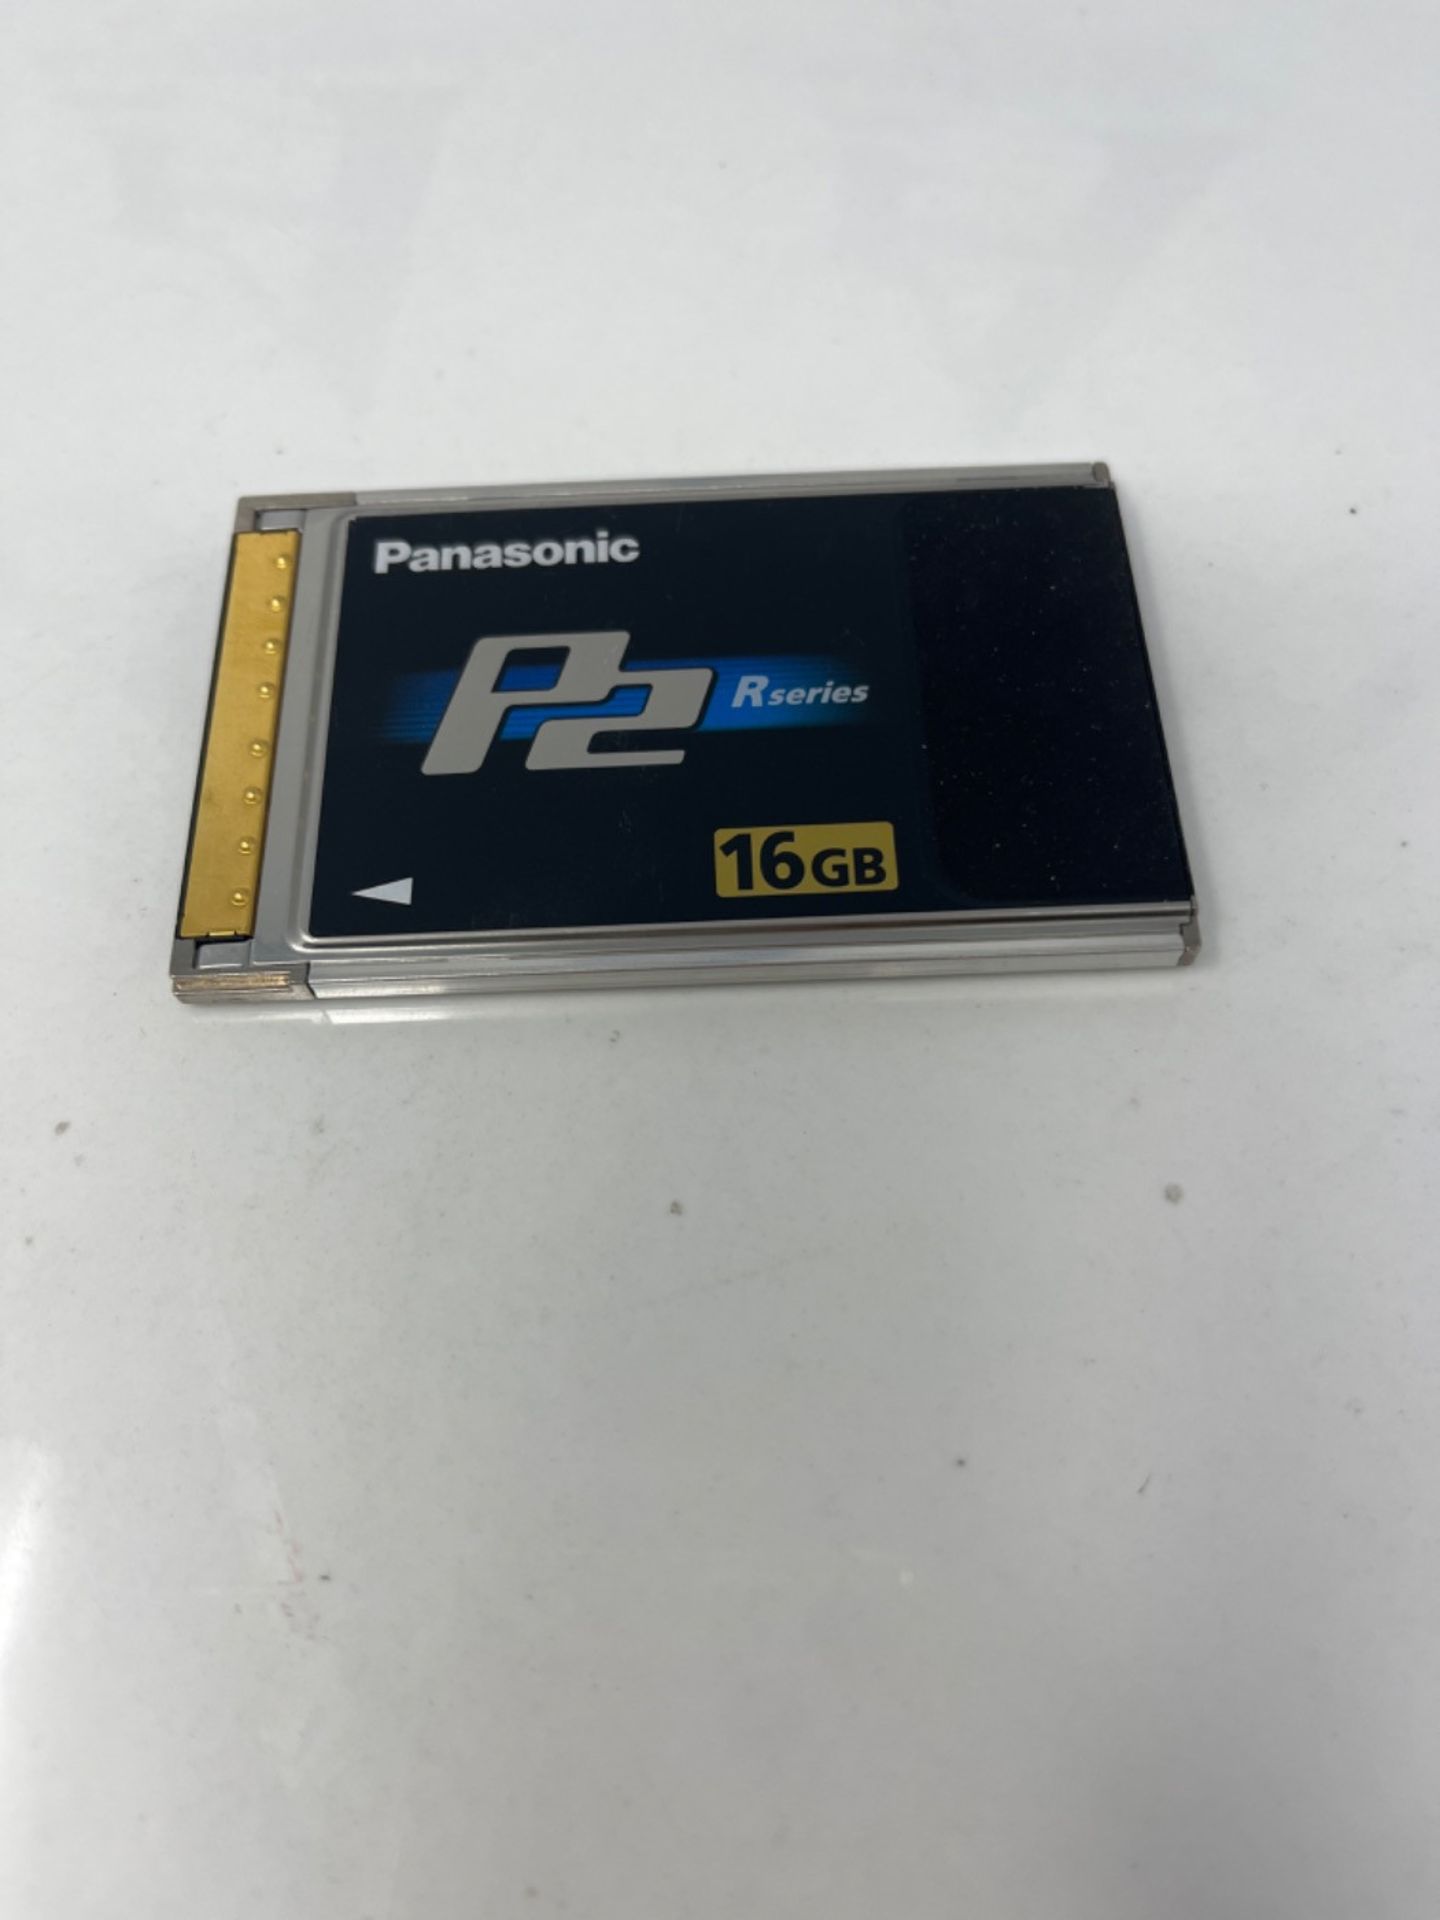 RRP £350.00 Panasonic P2 16GB RSeries card - Image 5 of 12